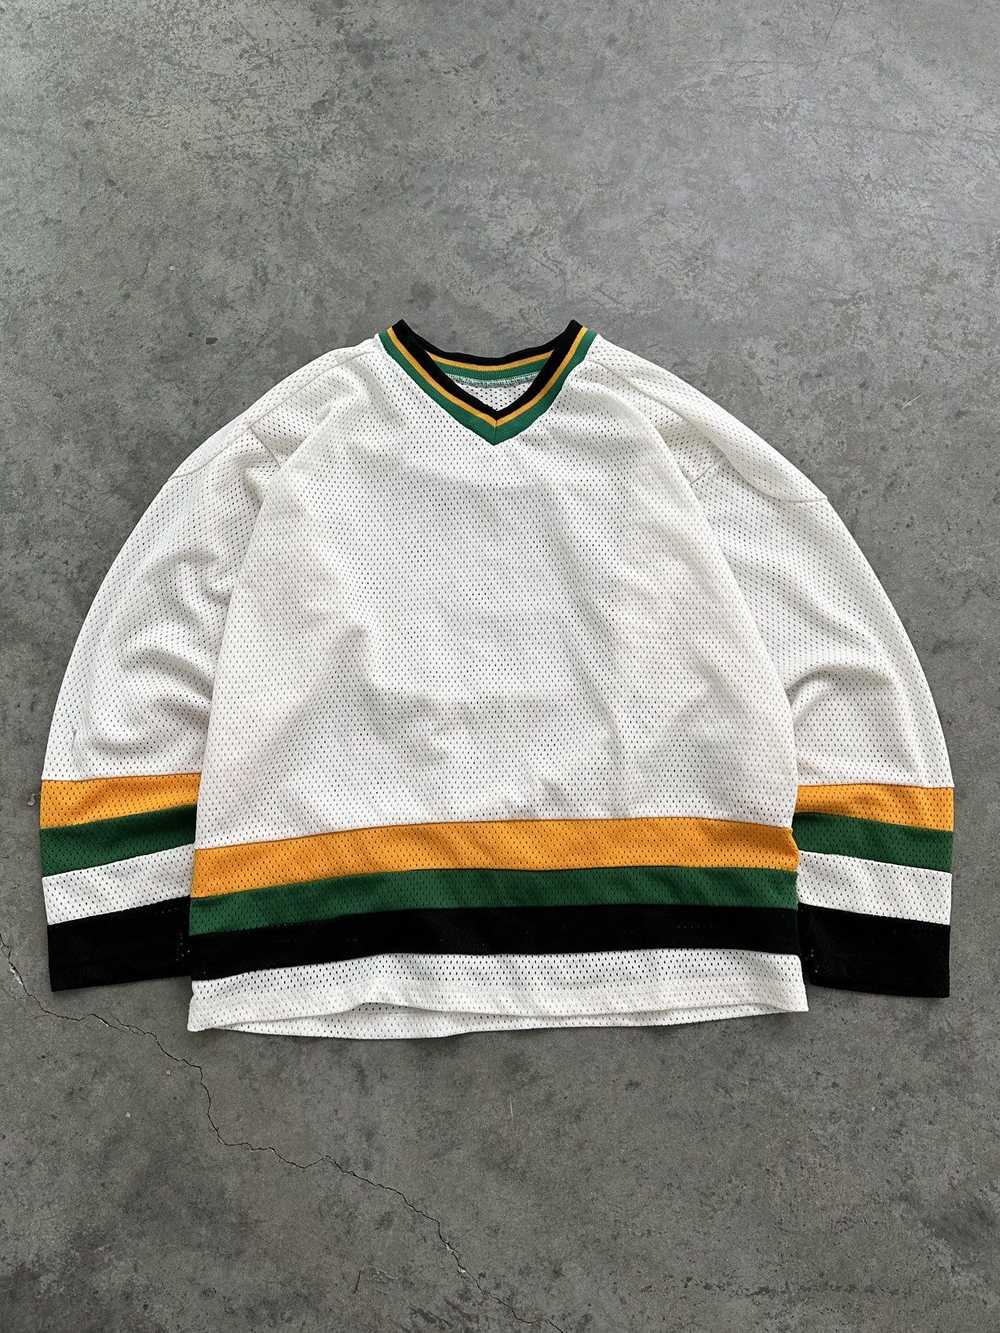 Vintage 1980s Hockey Jersey - image 1